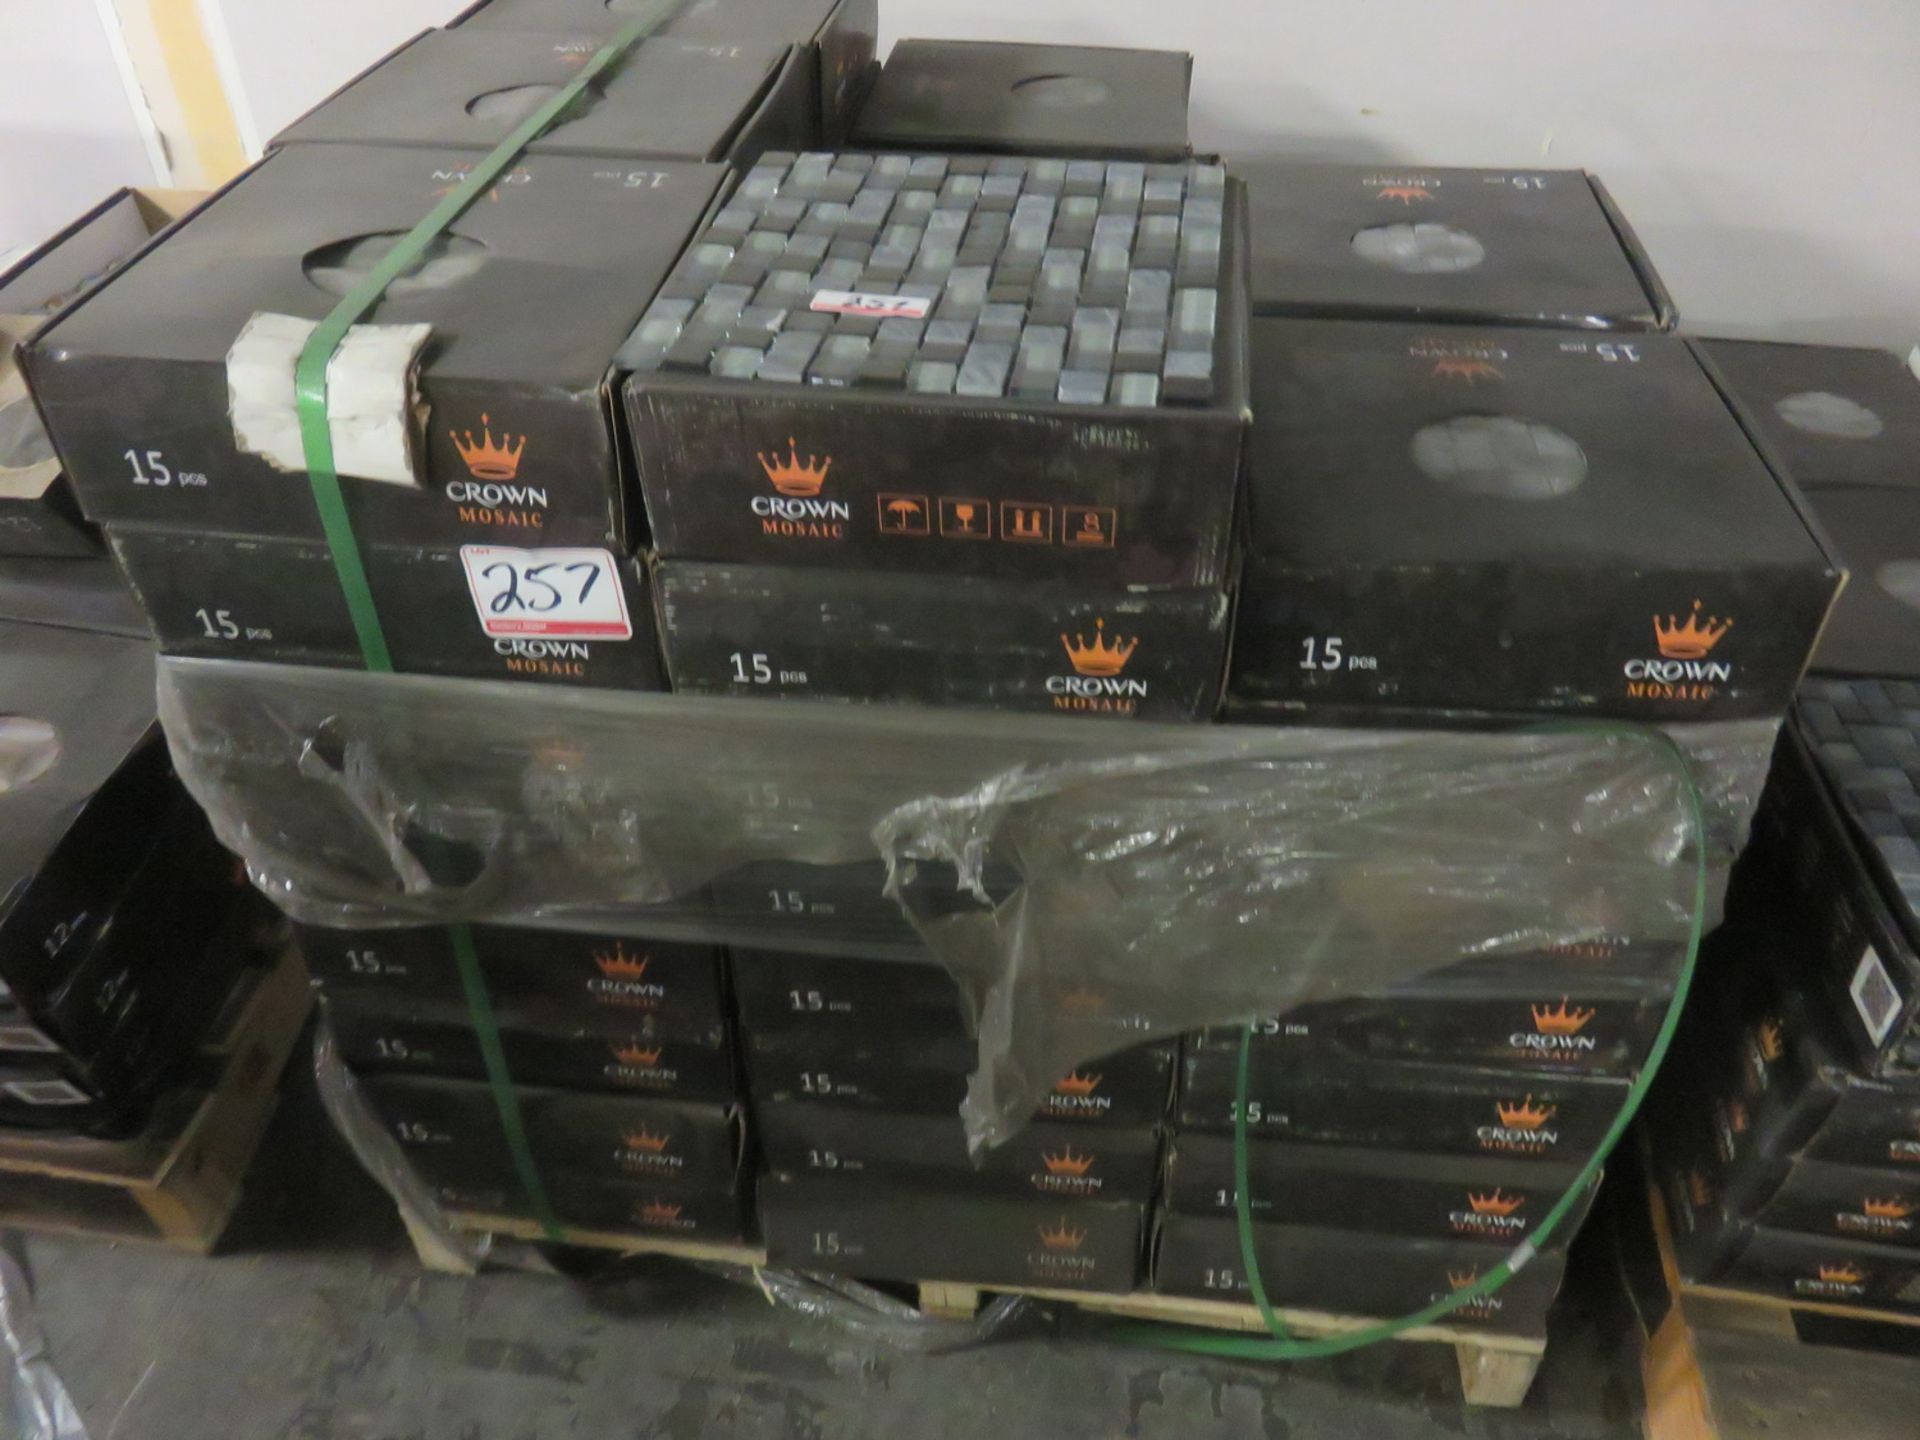 BOXES - CROWN ST23004 300 X 300 X 6MM MOSAIC TILES (15 PCS/BOX) - Image 3 of 3